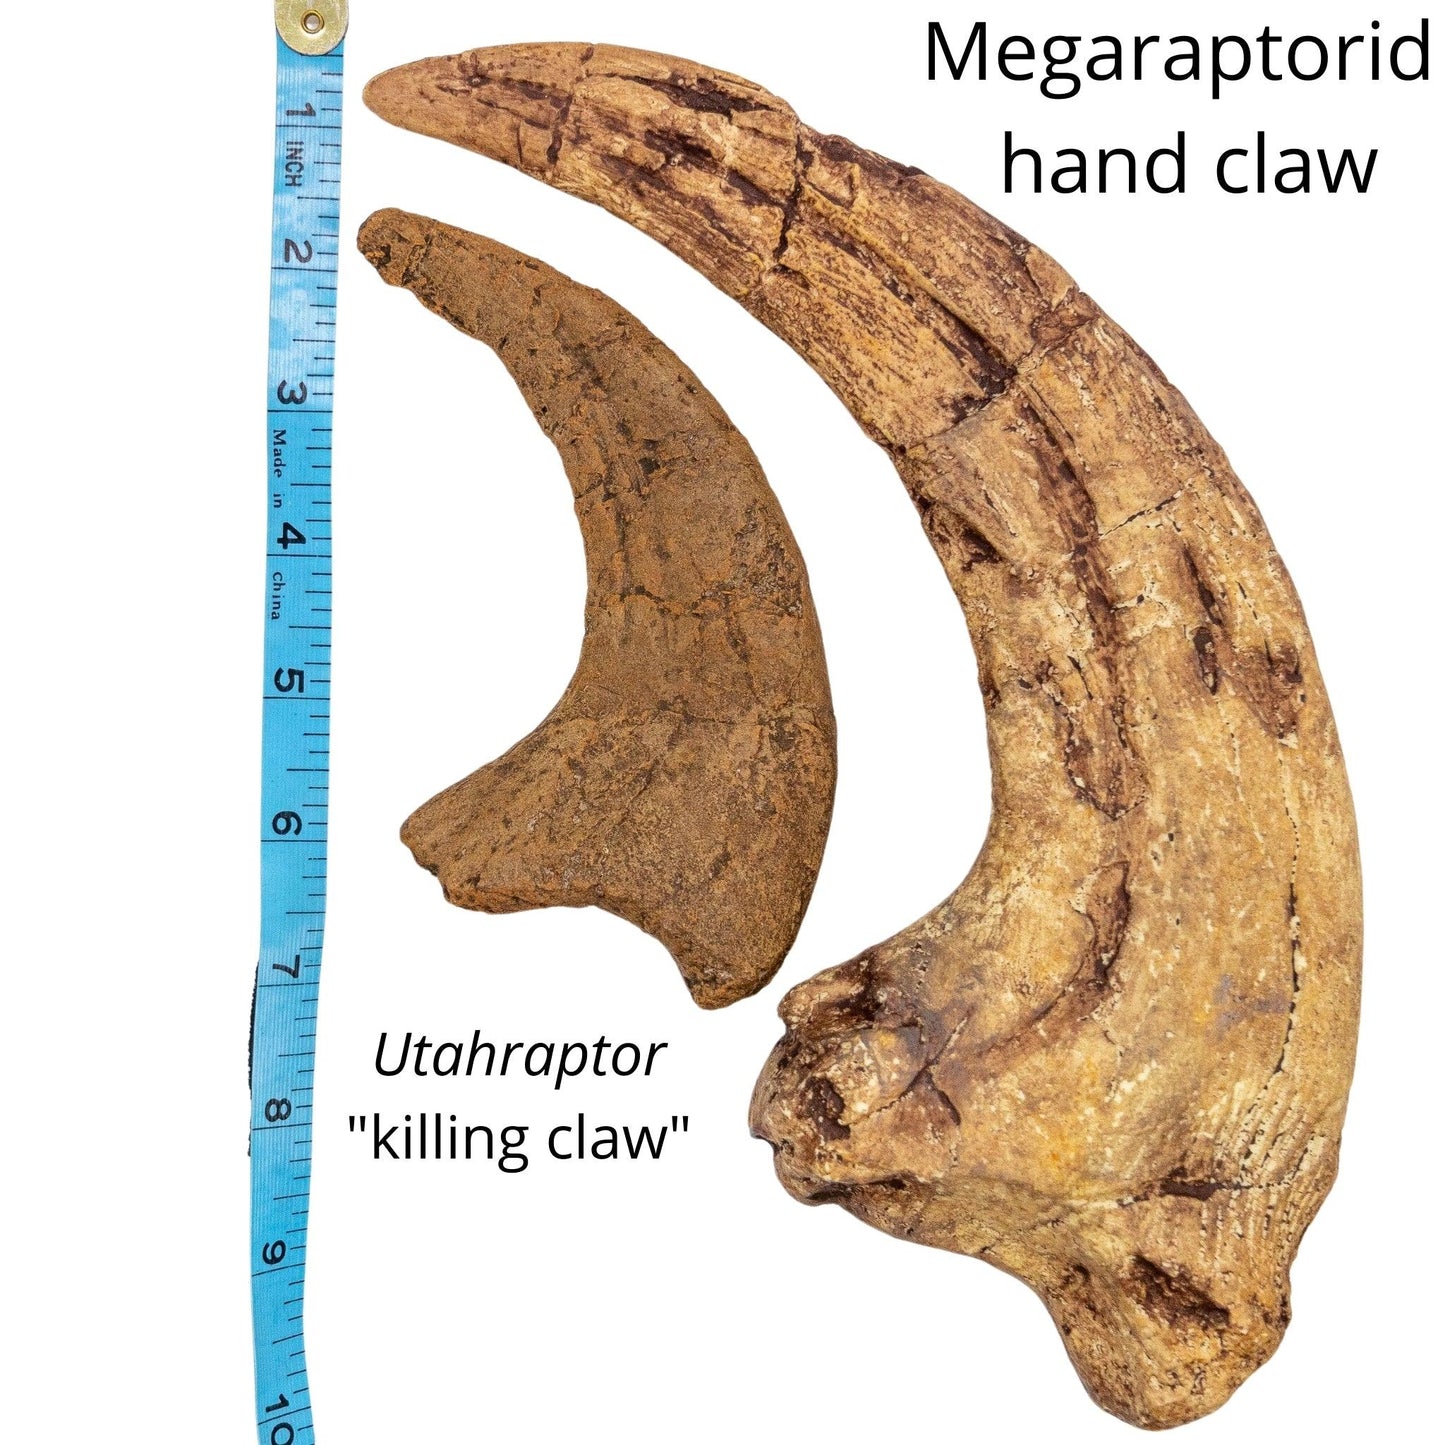 Megaraptorid hand claw and Utahraptor killing claw measured against ruler